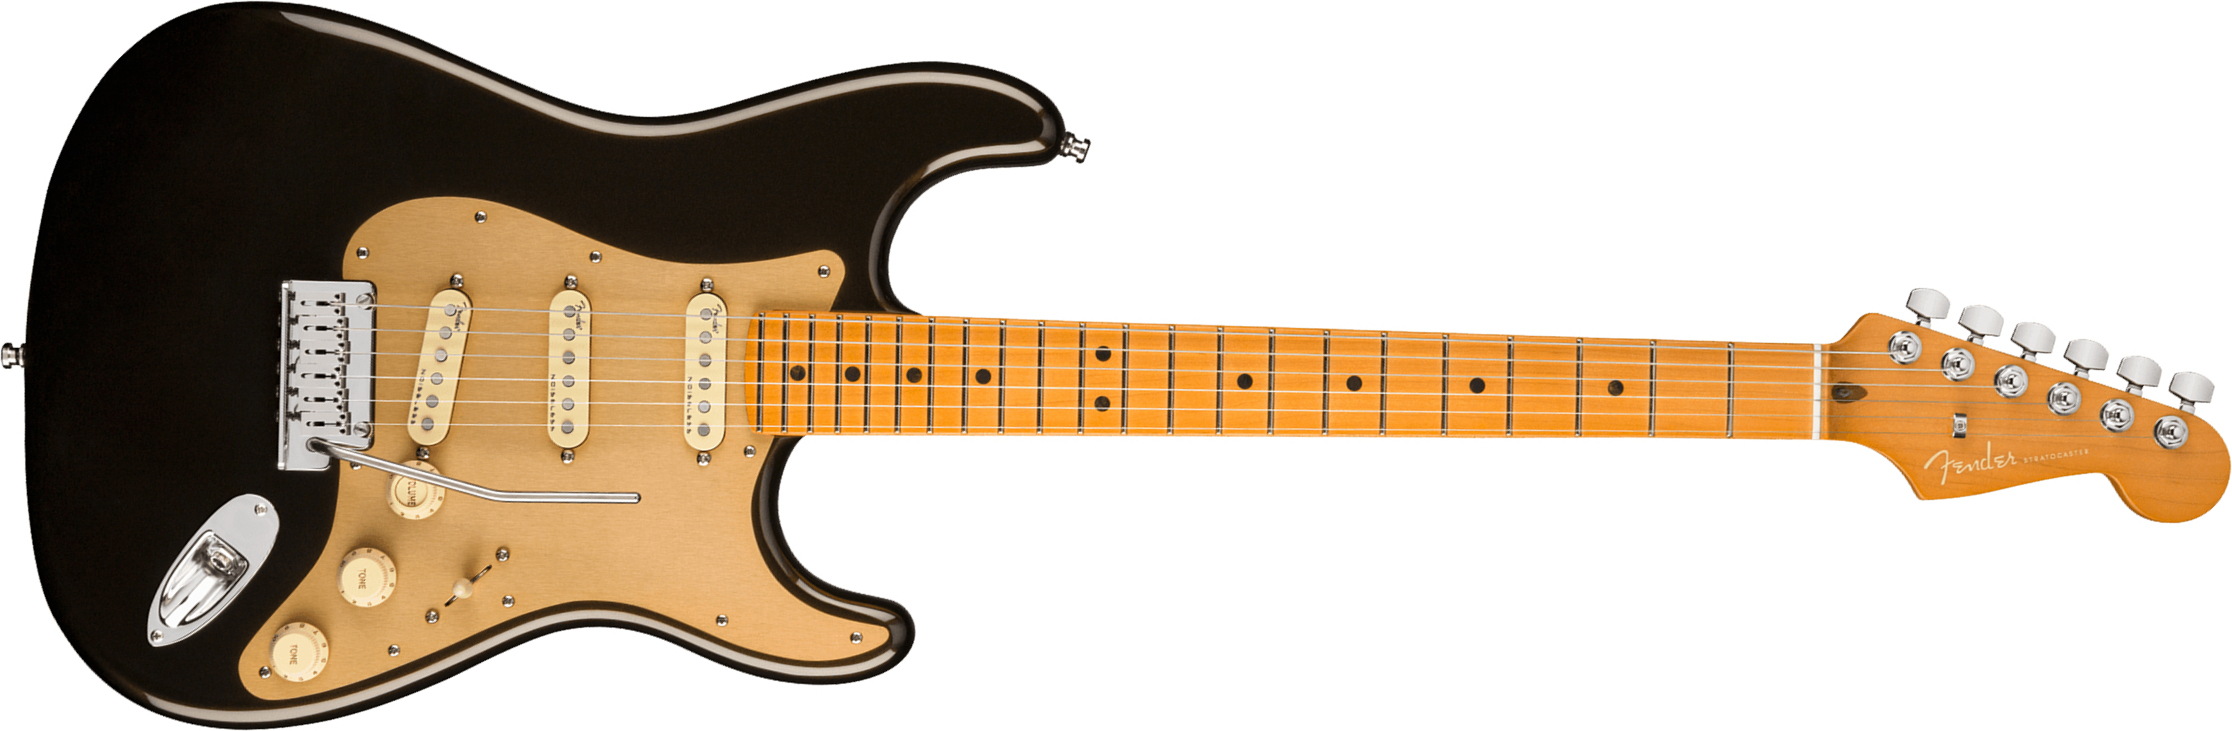 Fender Strat American Ultra 2019 Usa Mn - Texas Tea - Guitarra eléctrica con forma de str. - Main picture